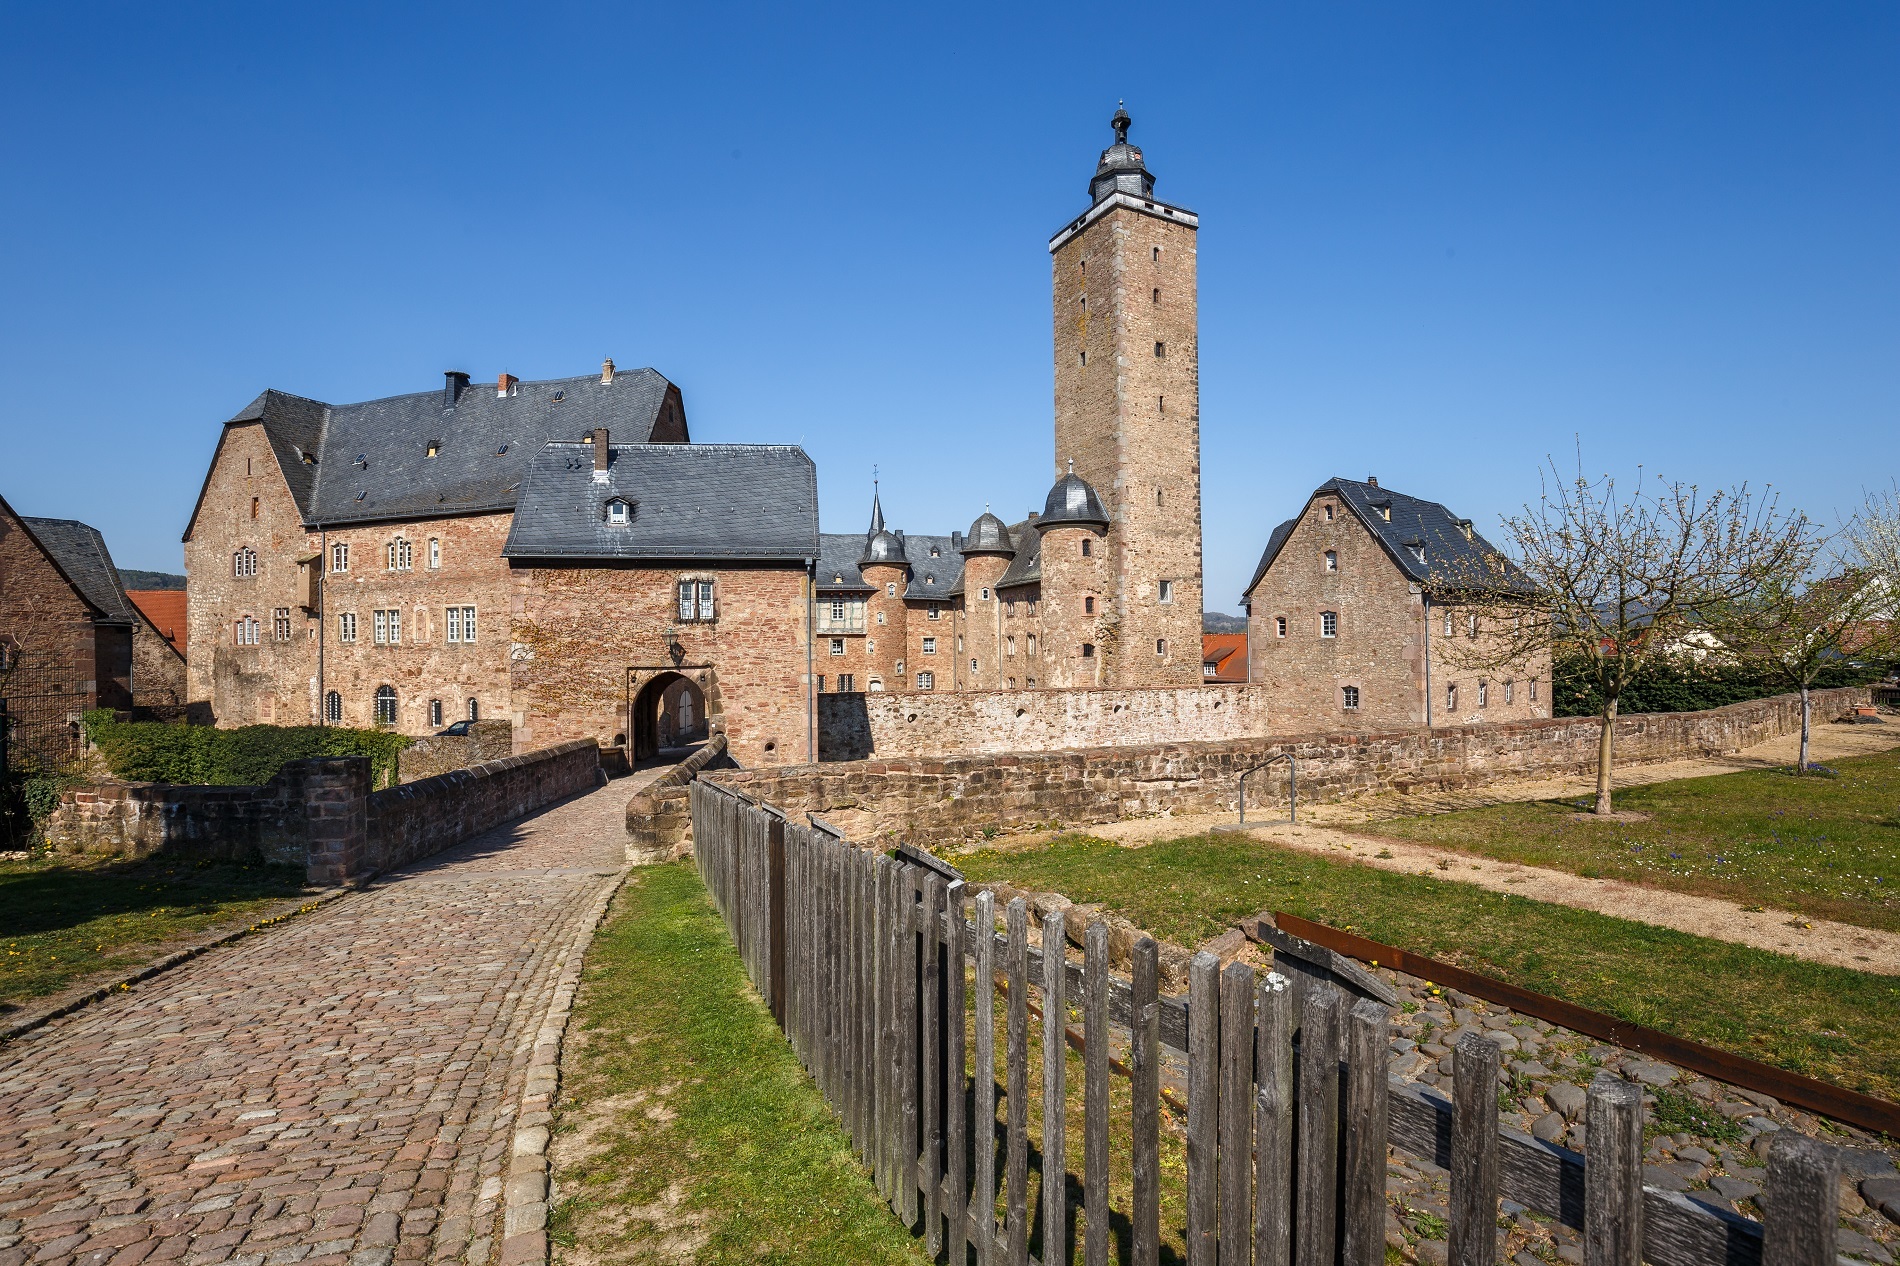 Steinau Castle